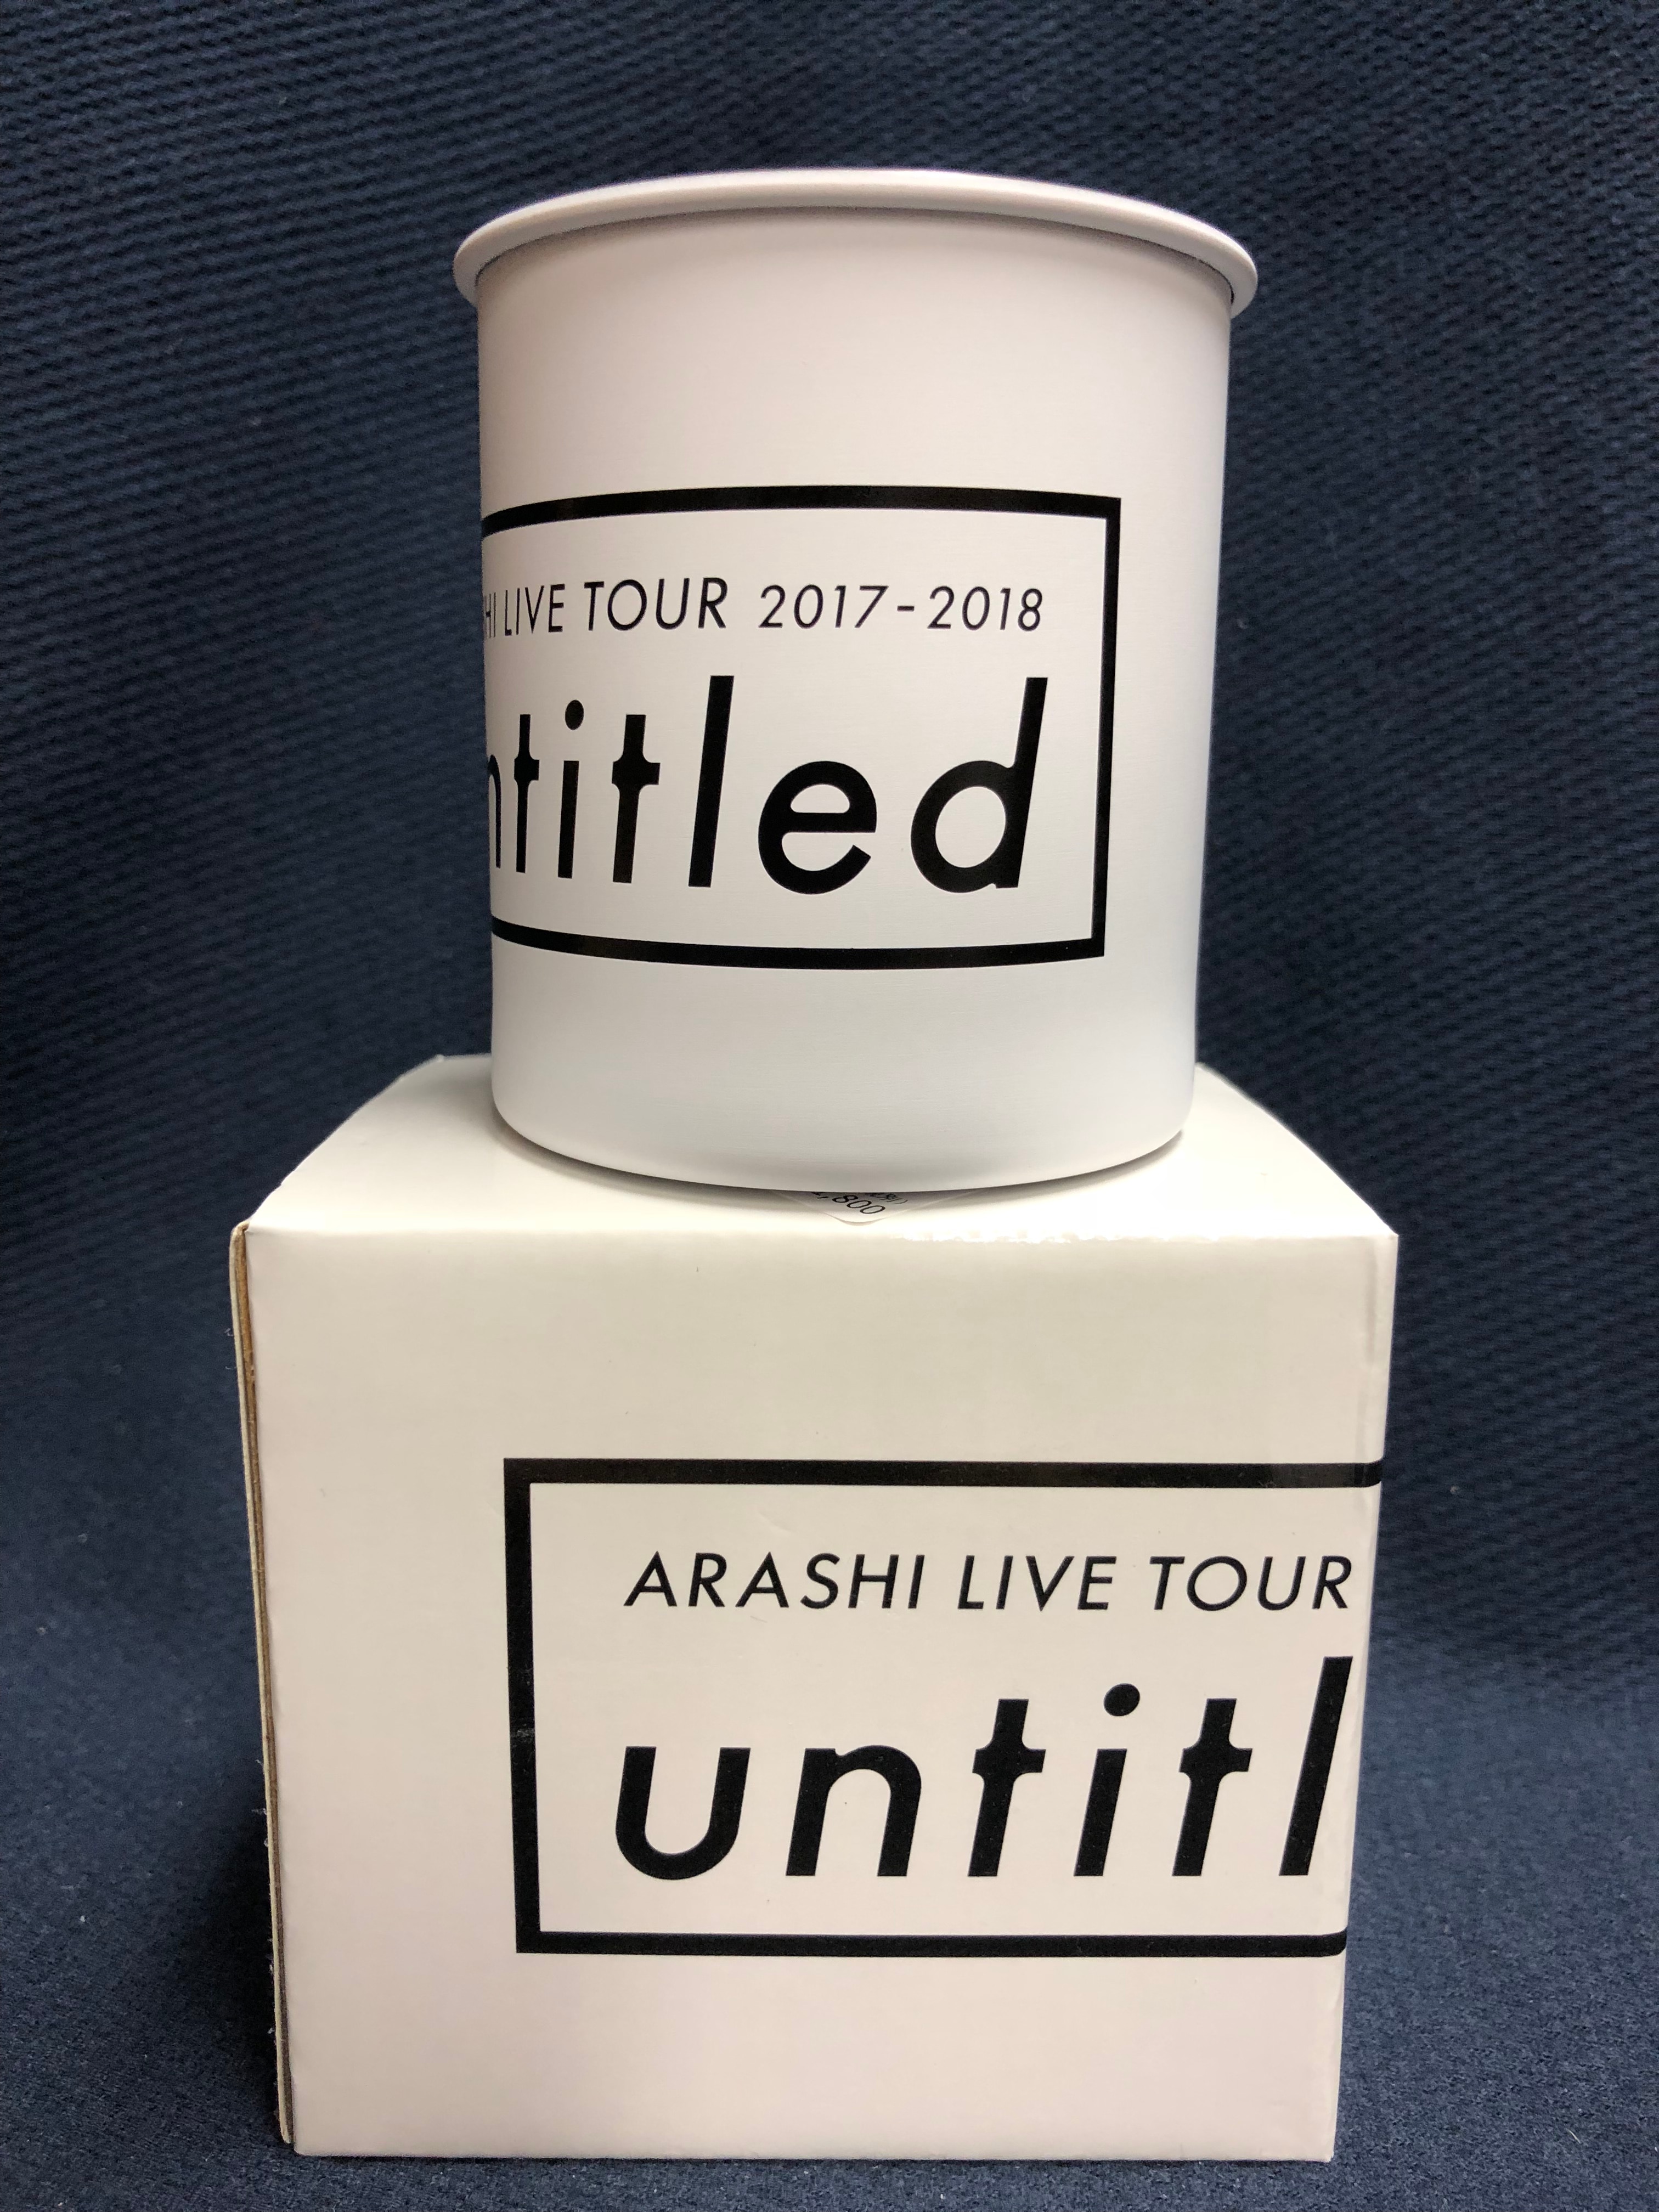 ARASHI LIVE TOUR 2017-2018 ステンレスカップ